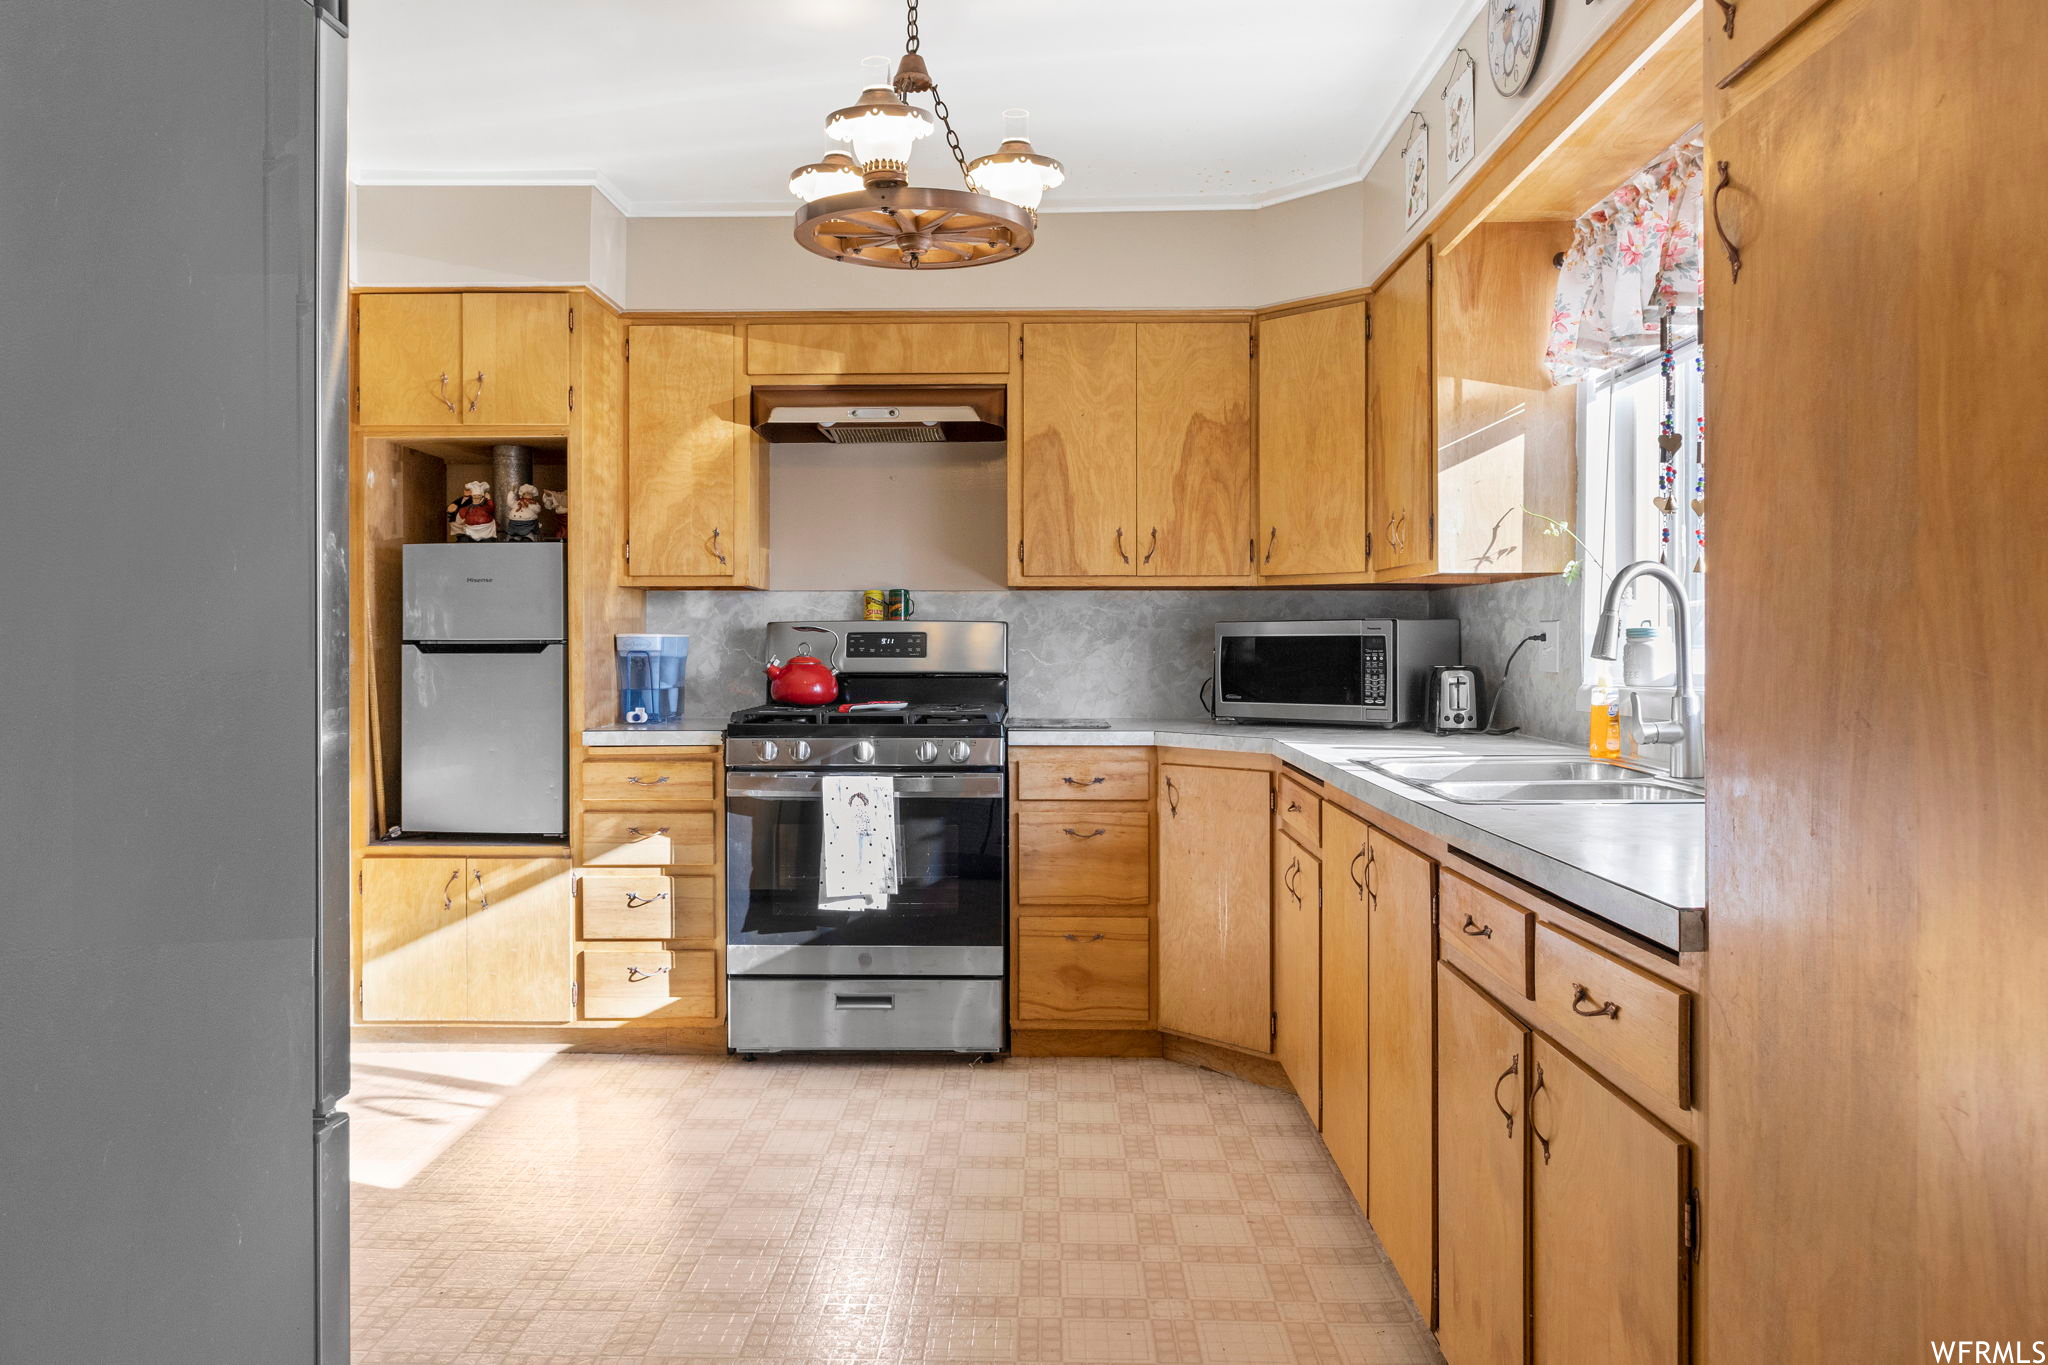 Kitchen with backsplash, ornamental molding, light tile flooring, and stainless steel appliances